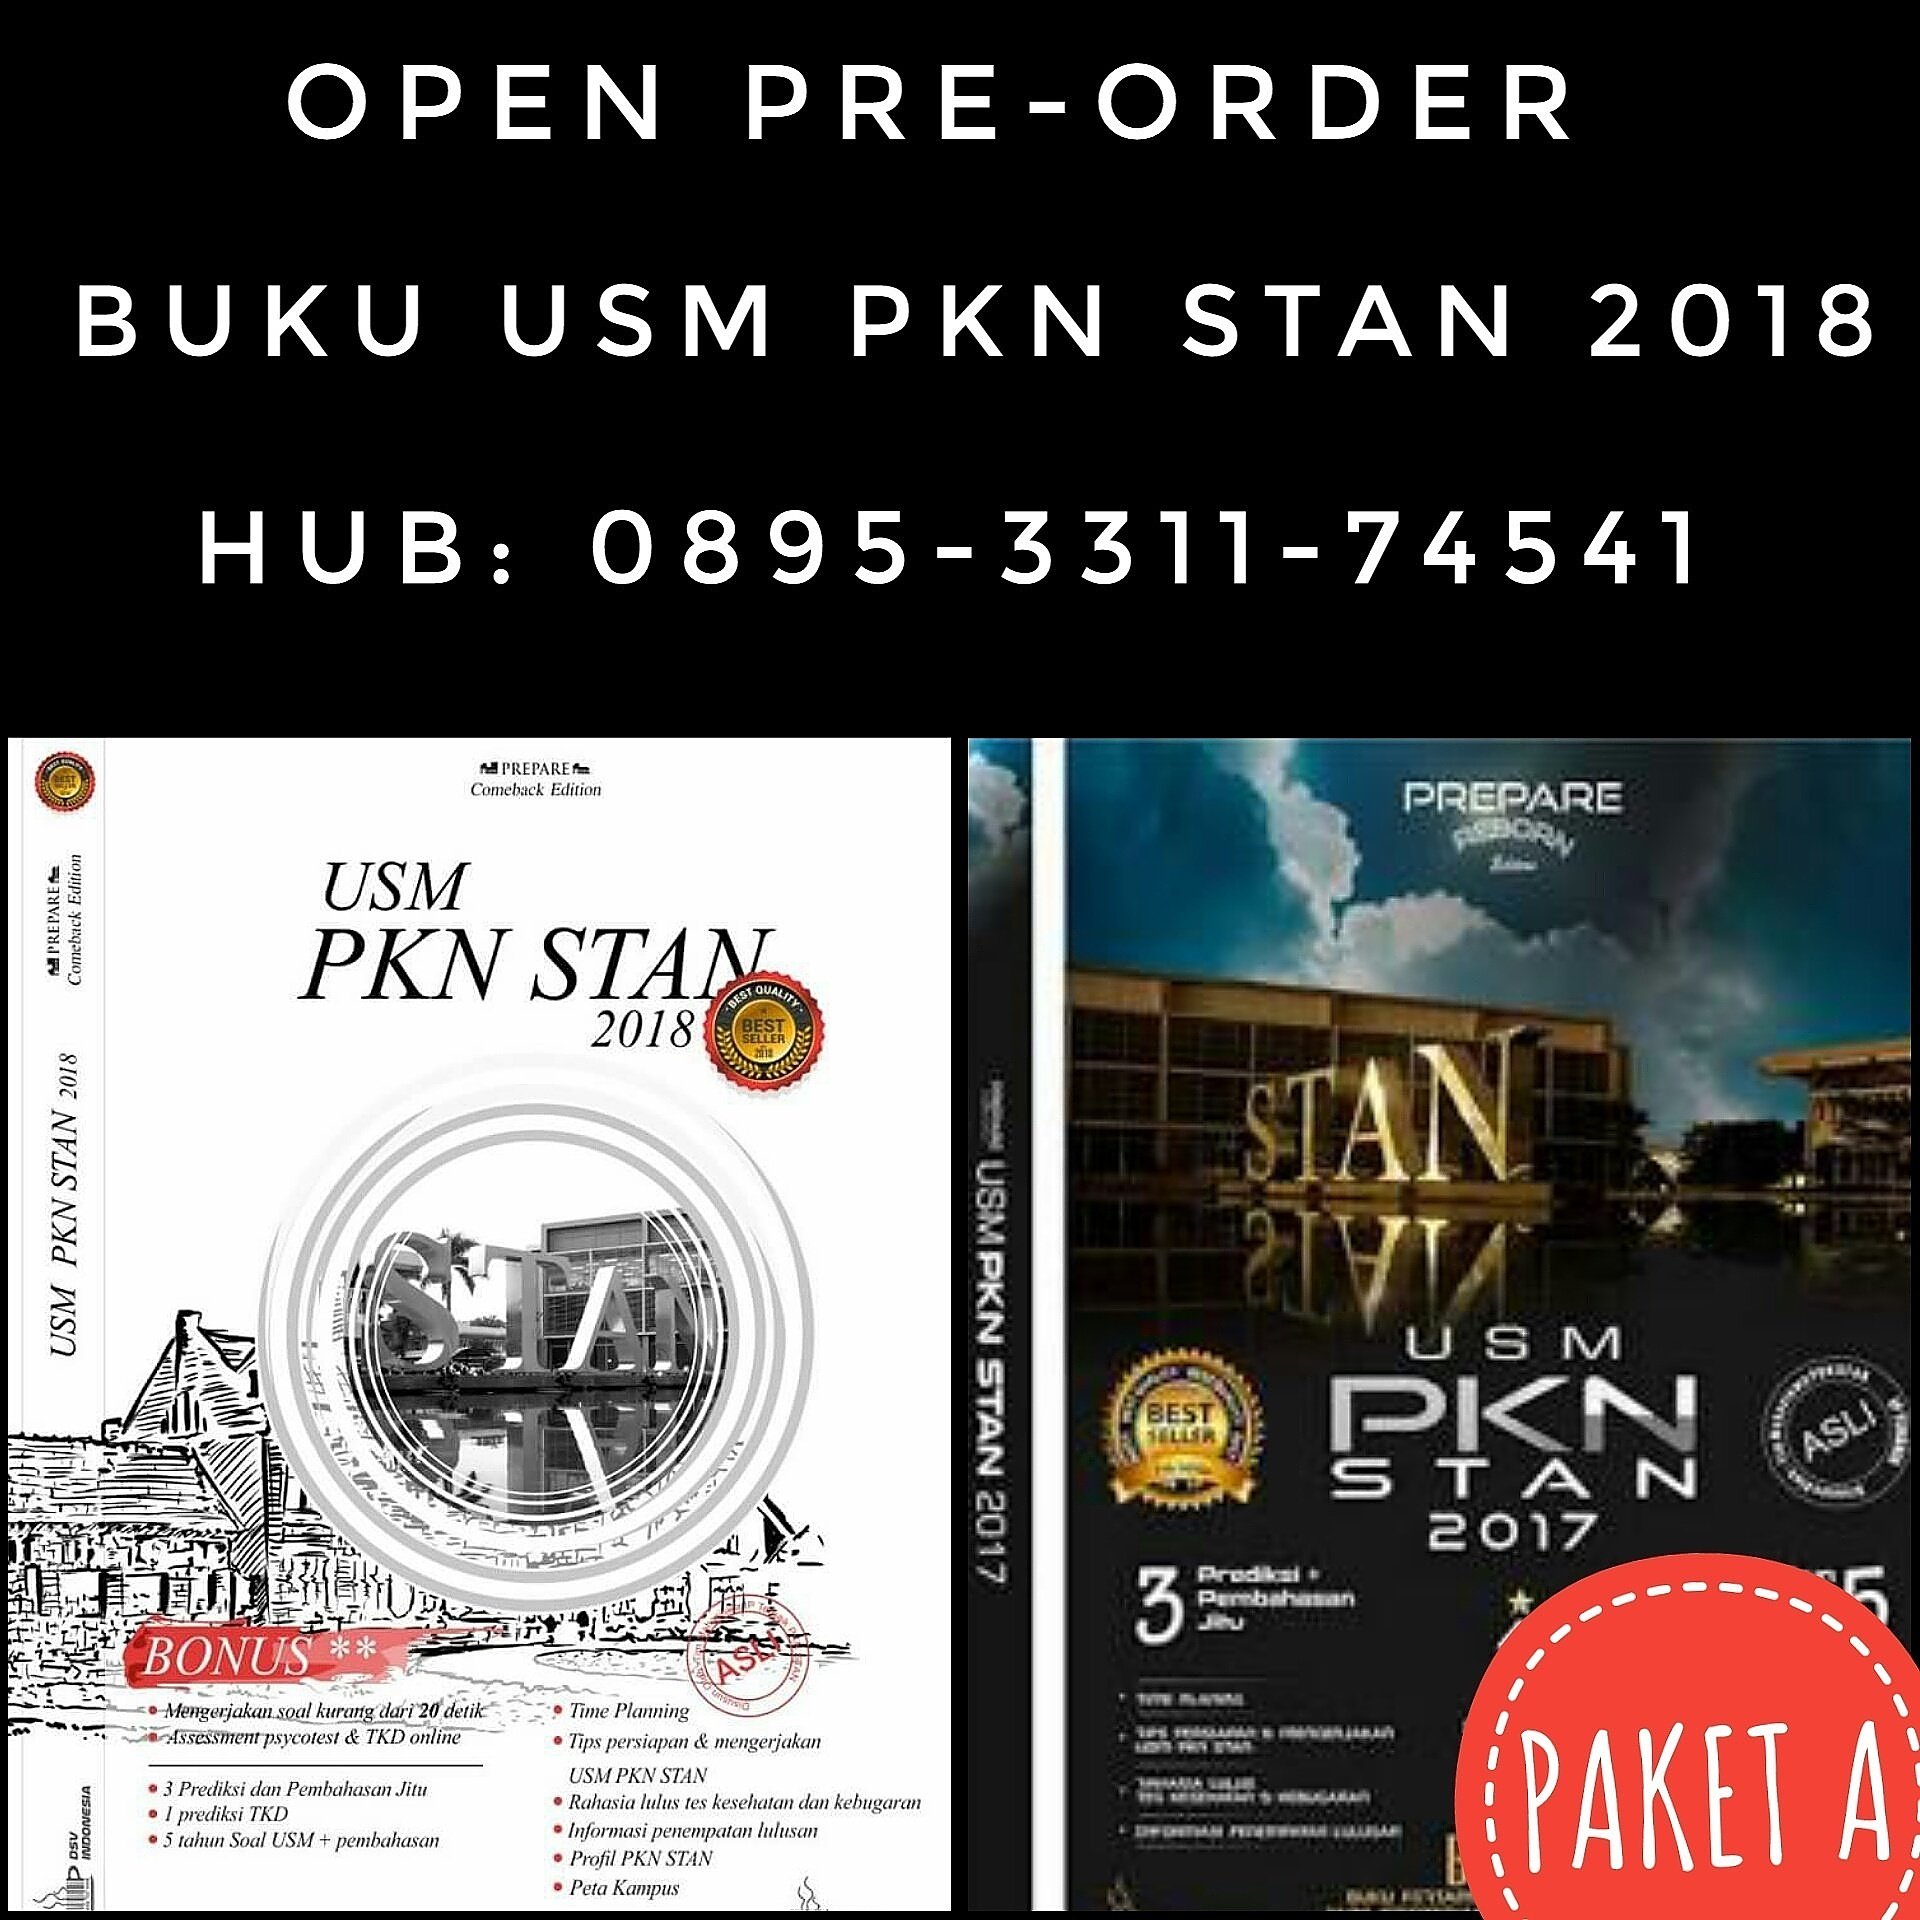 BUKU SPMB PKN STAN 2019 on Twitter "[PRE ORDER] BUKU PREPARE USM STAN 2018 PAKET A ISI 2 BUKU Rp 75 000 Hub 0895 3311 … "